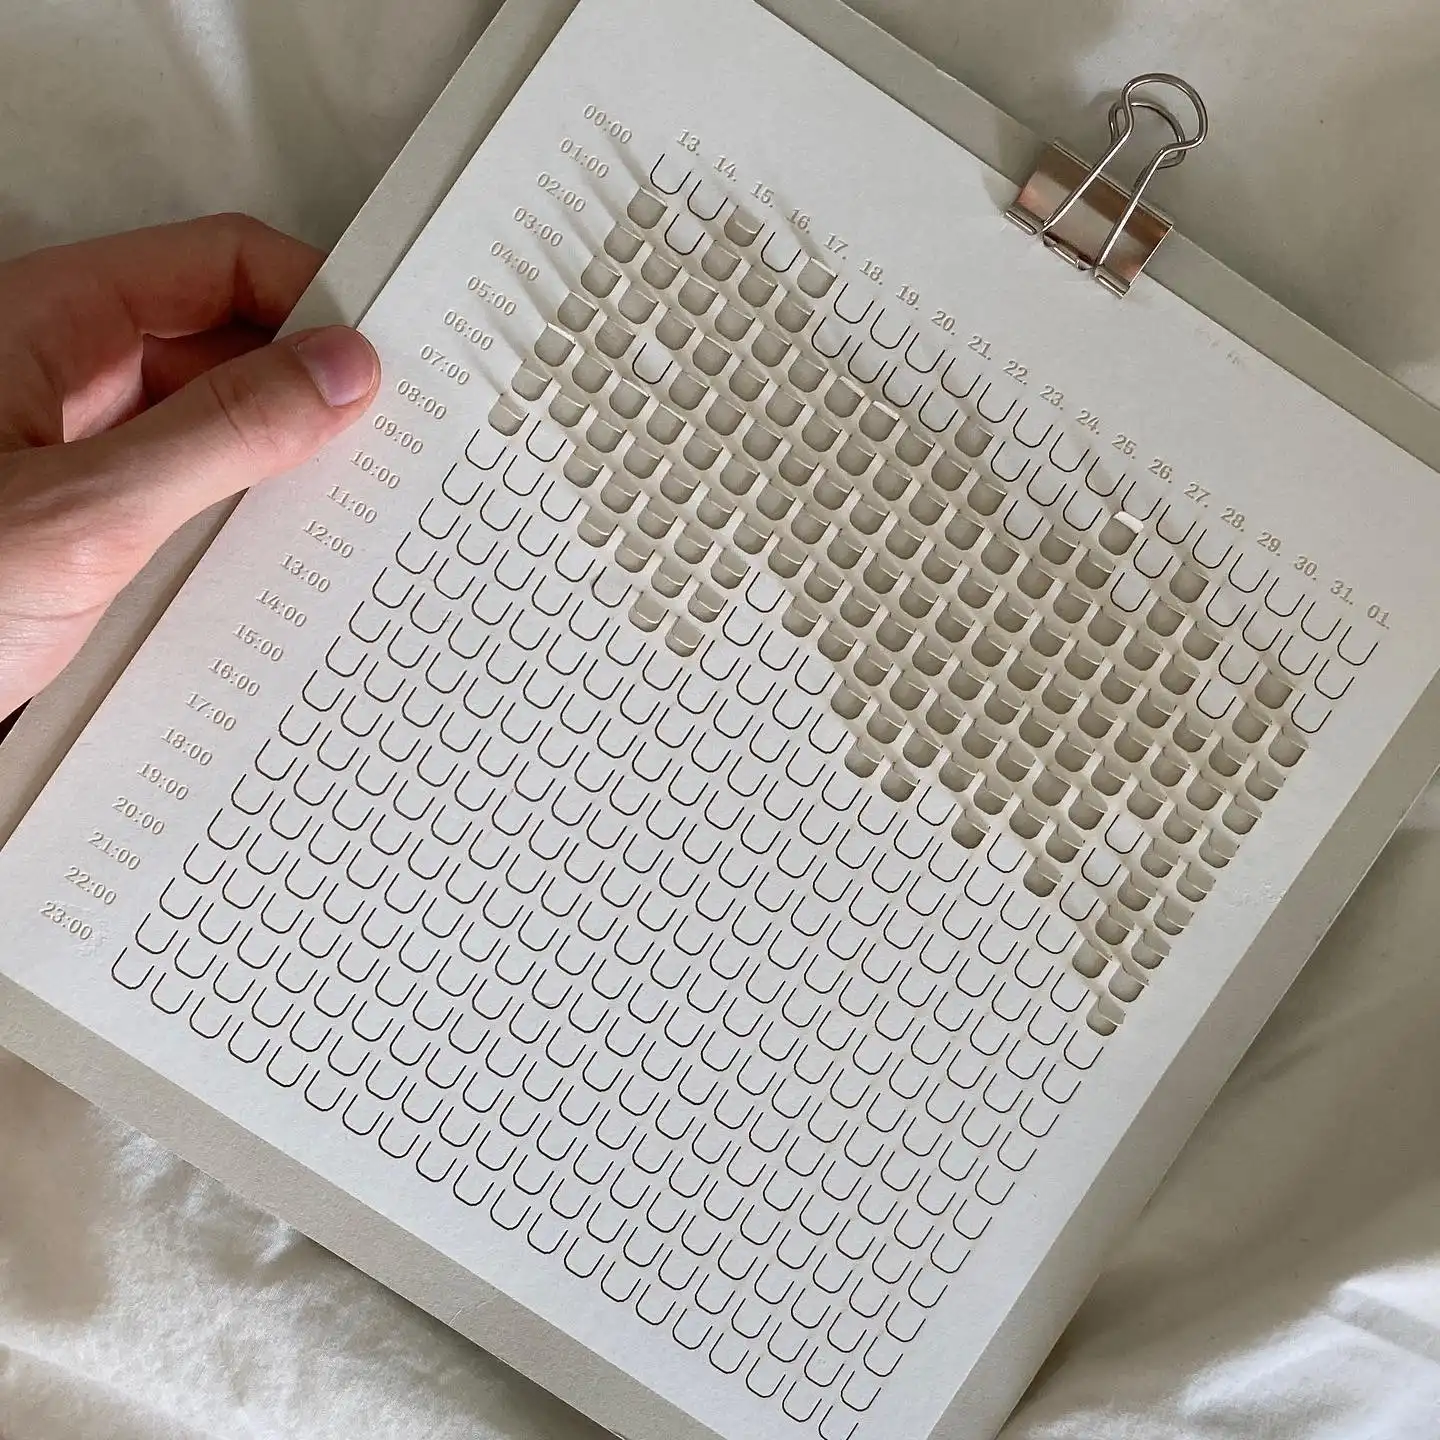 paper prototype of a sleep calendar